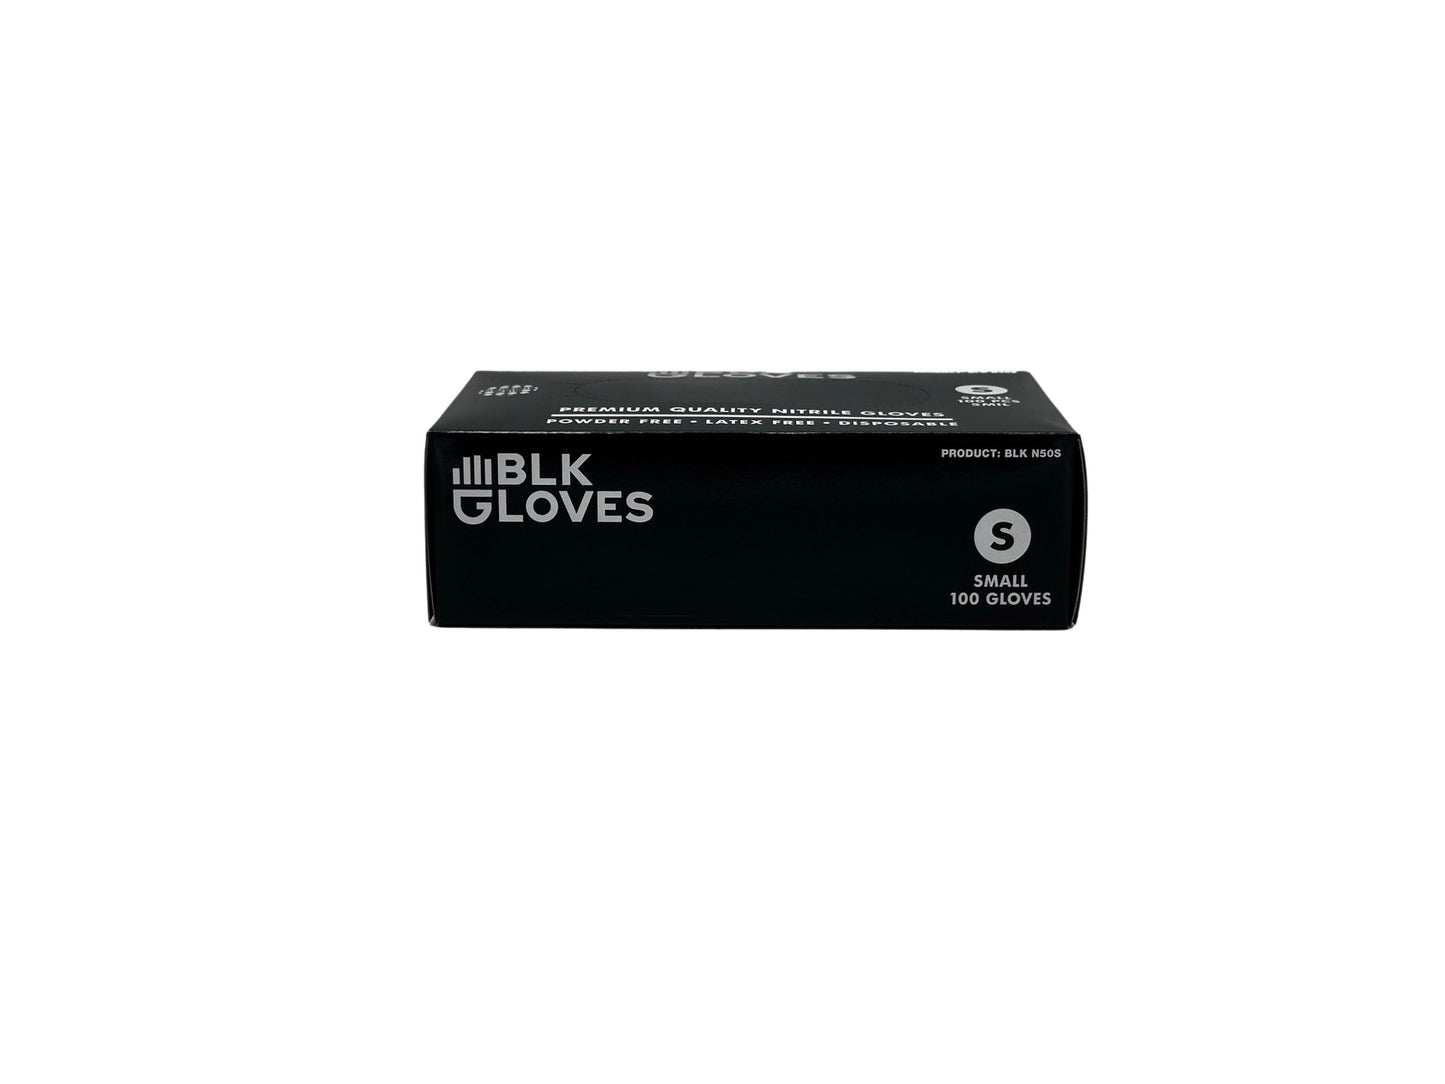 Blk Gloves - Single Box [100 Gloves]